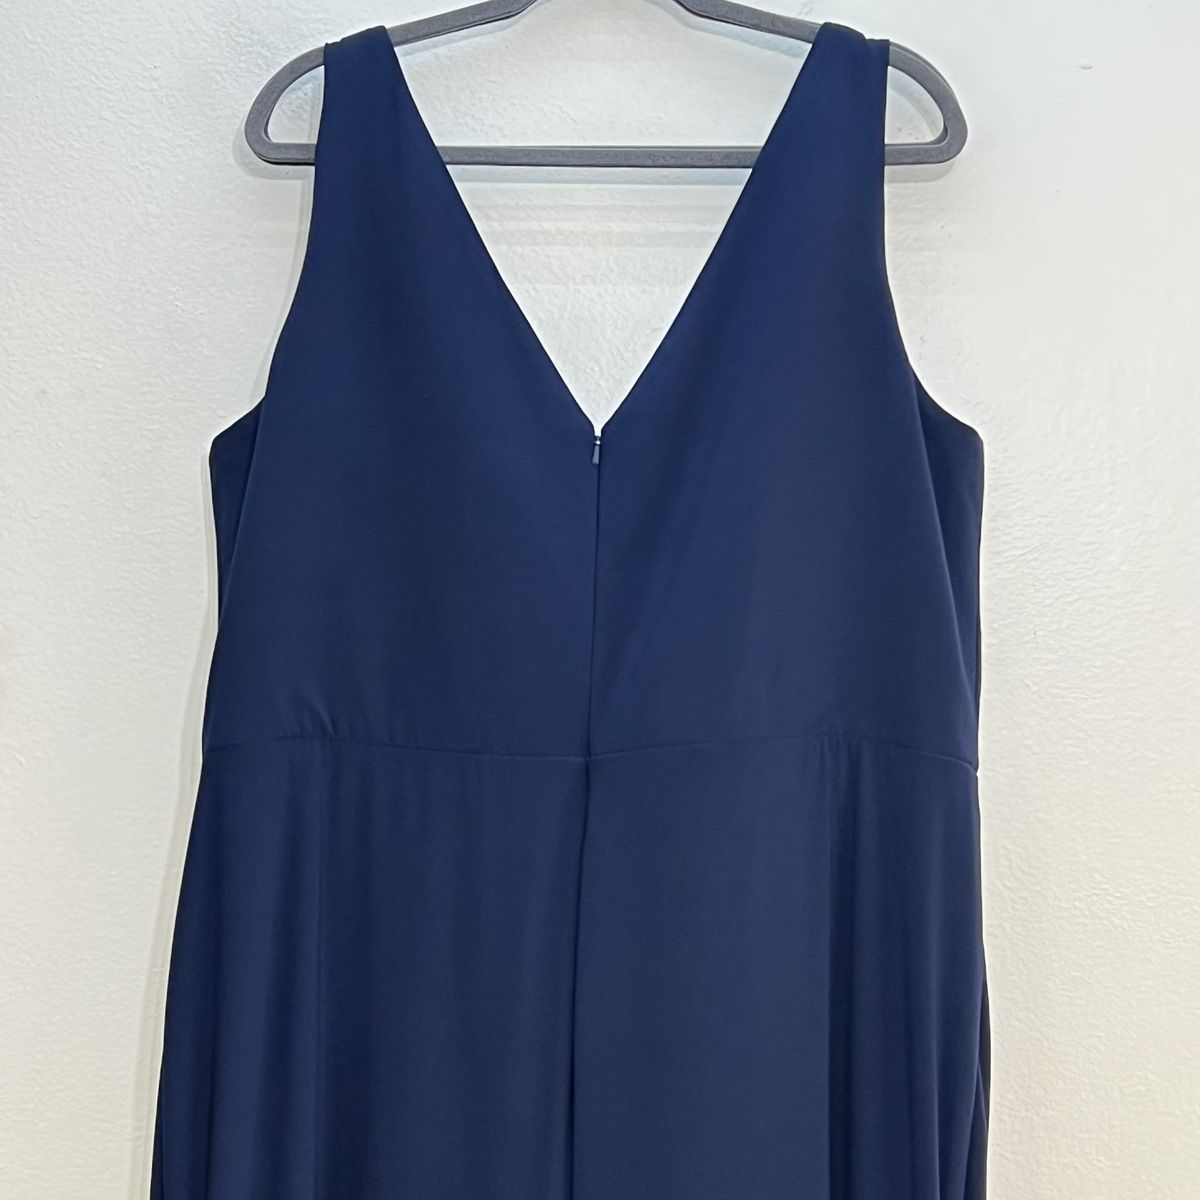 Style 28882 La Femme Plus Size 20 Prom Navy Blue Side Slit Dress on Queenly